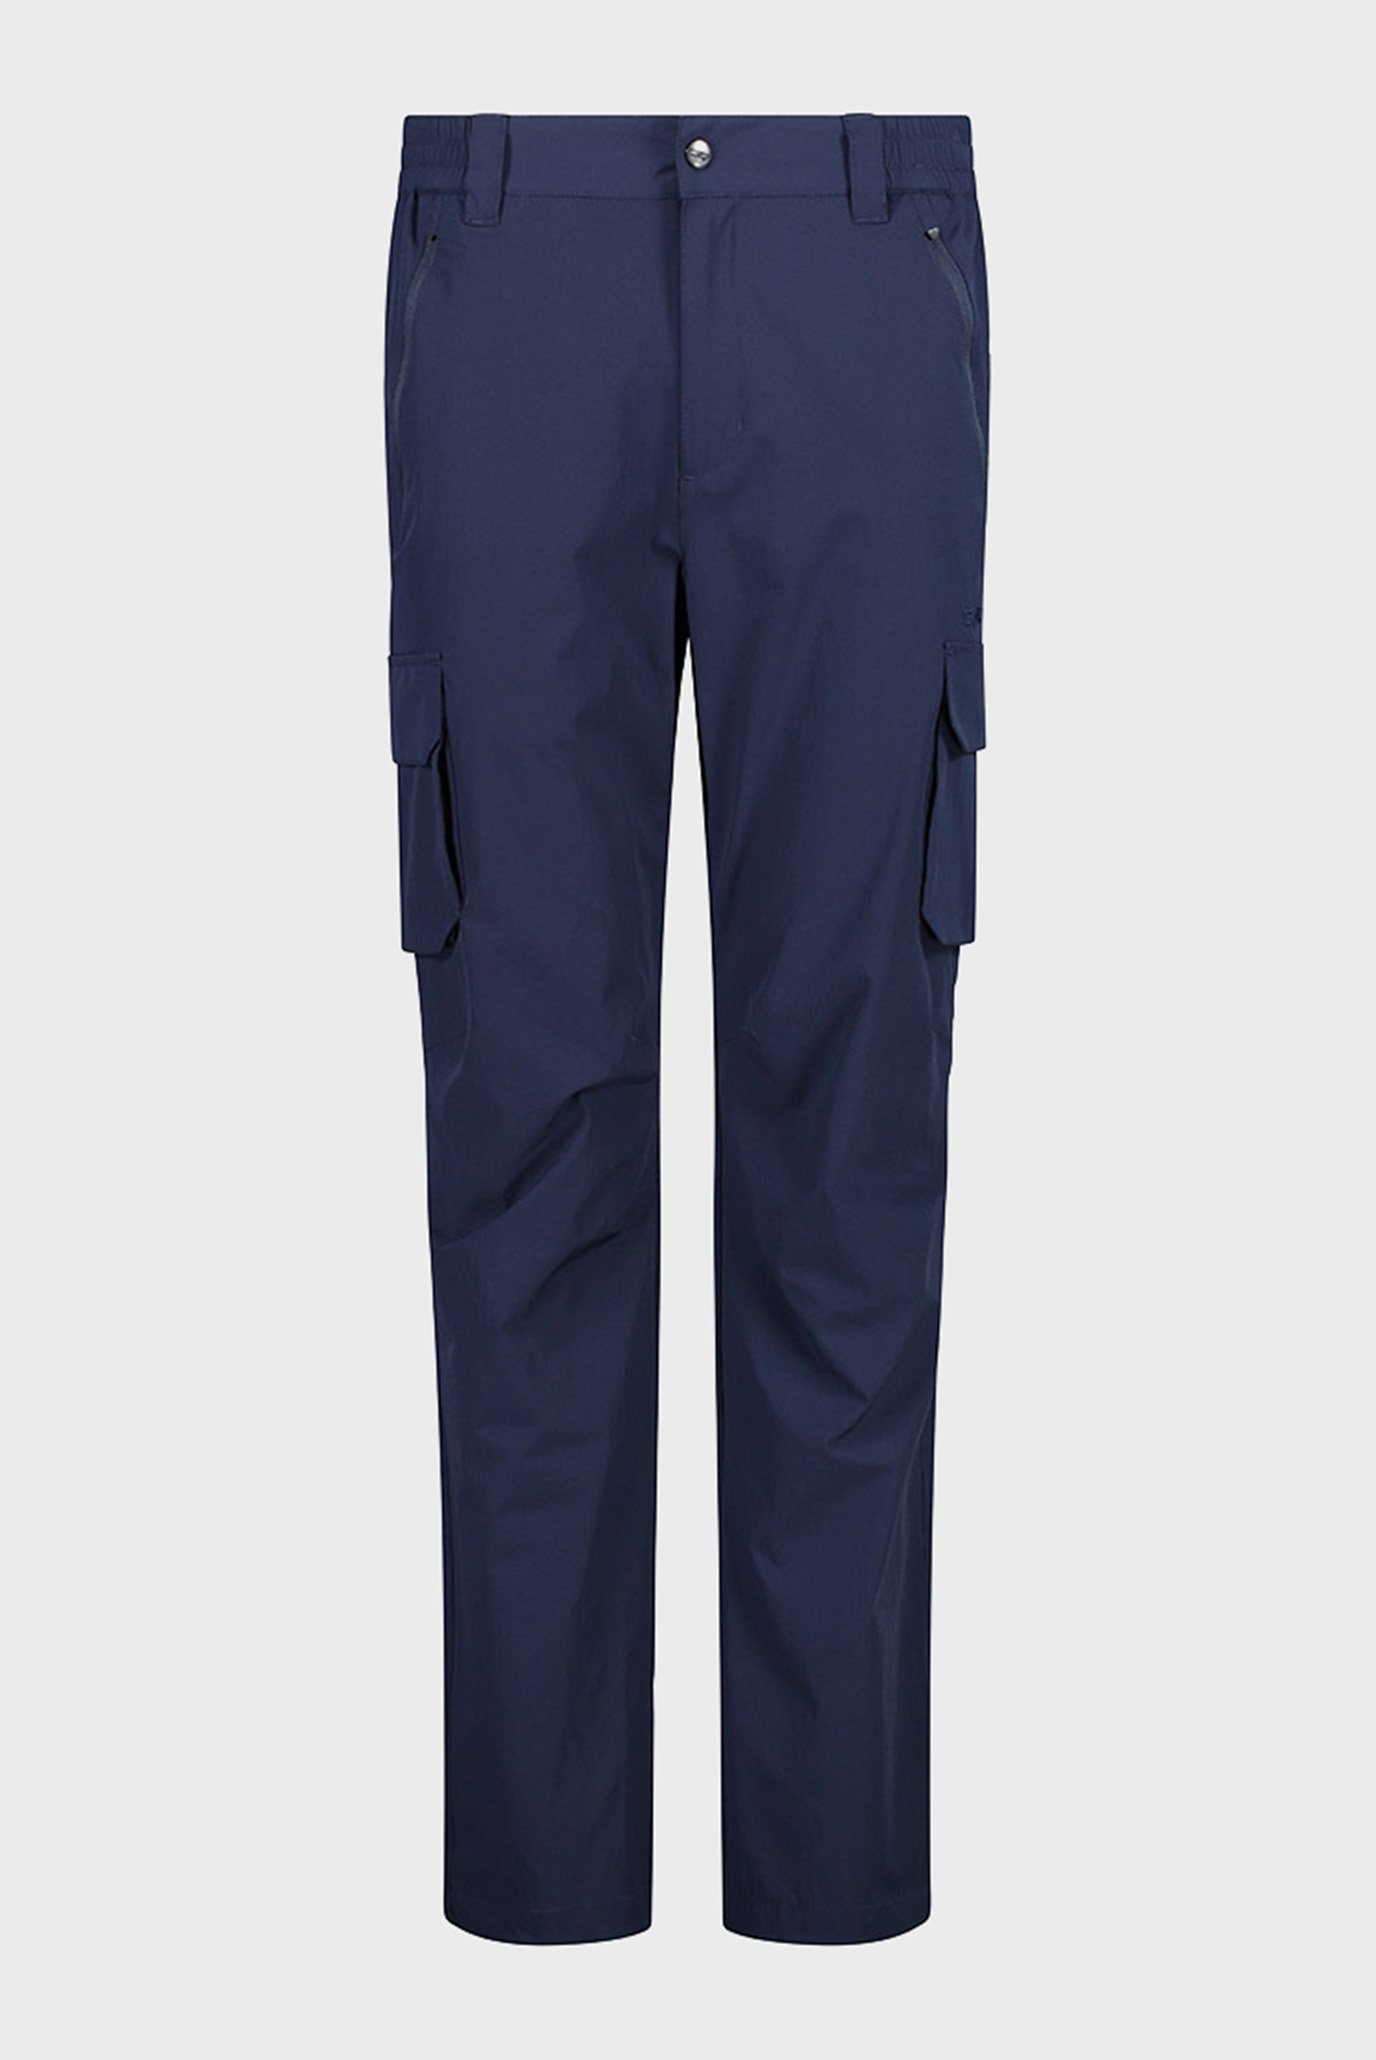 Мужские темно-синие спортивные брюки MAN LONG PANT 1